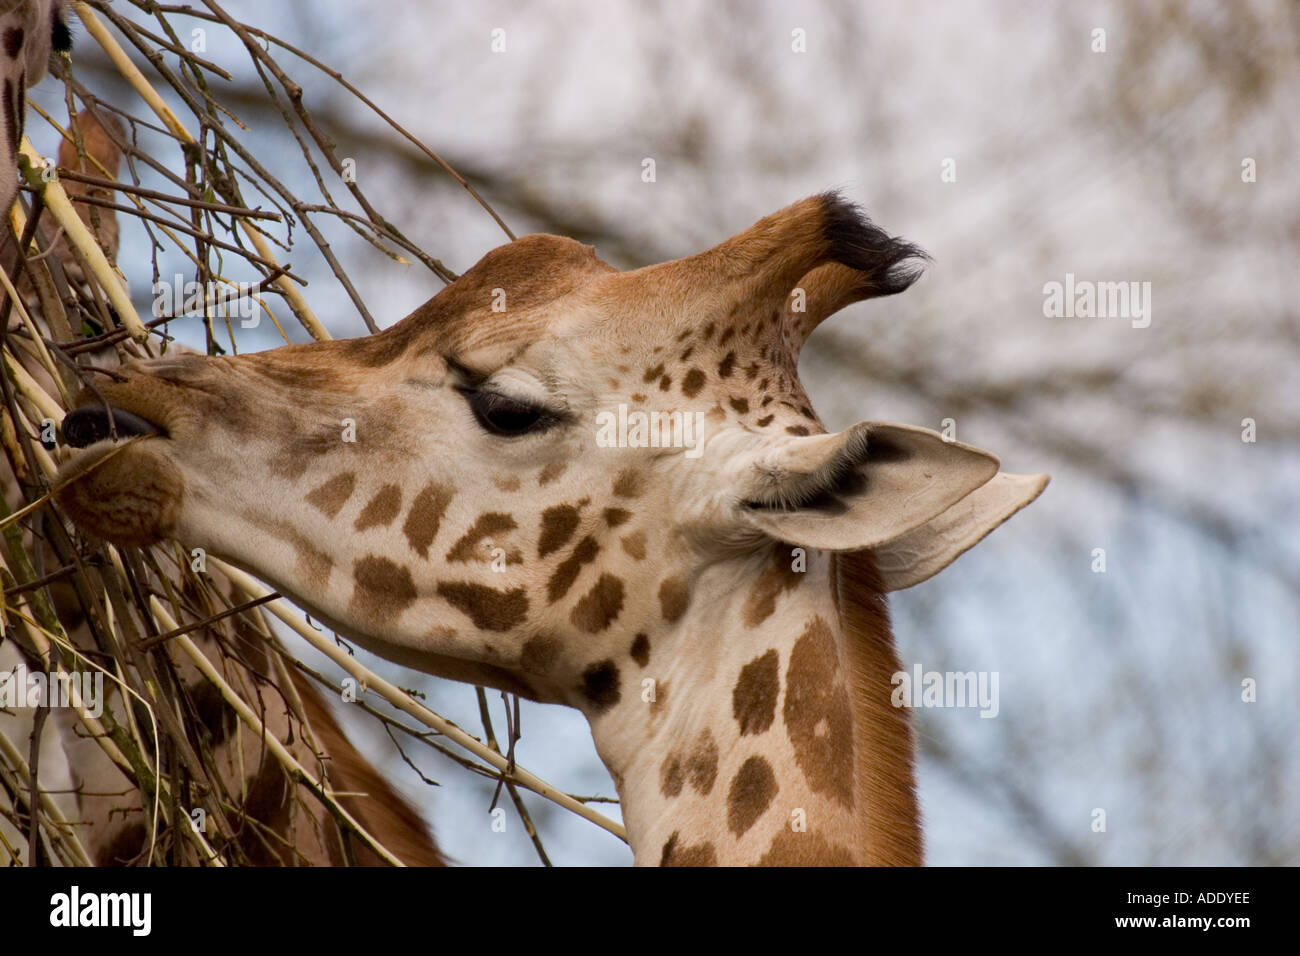 A feeding giraffe Stock Photo